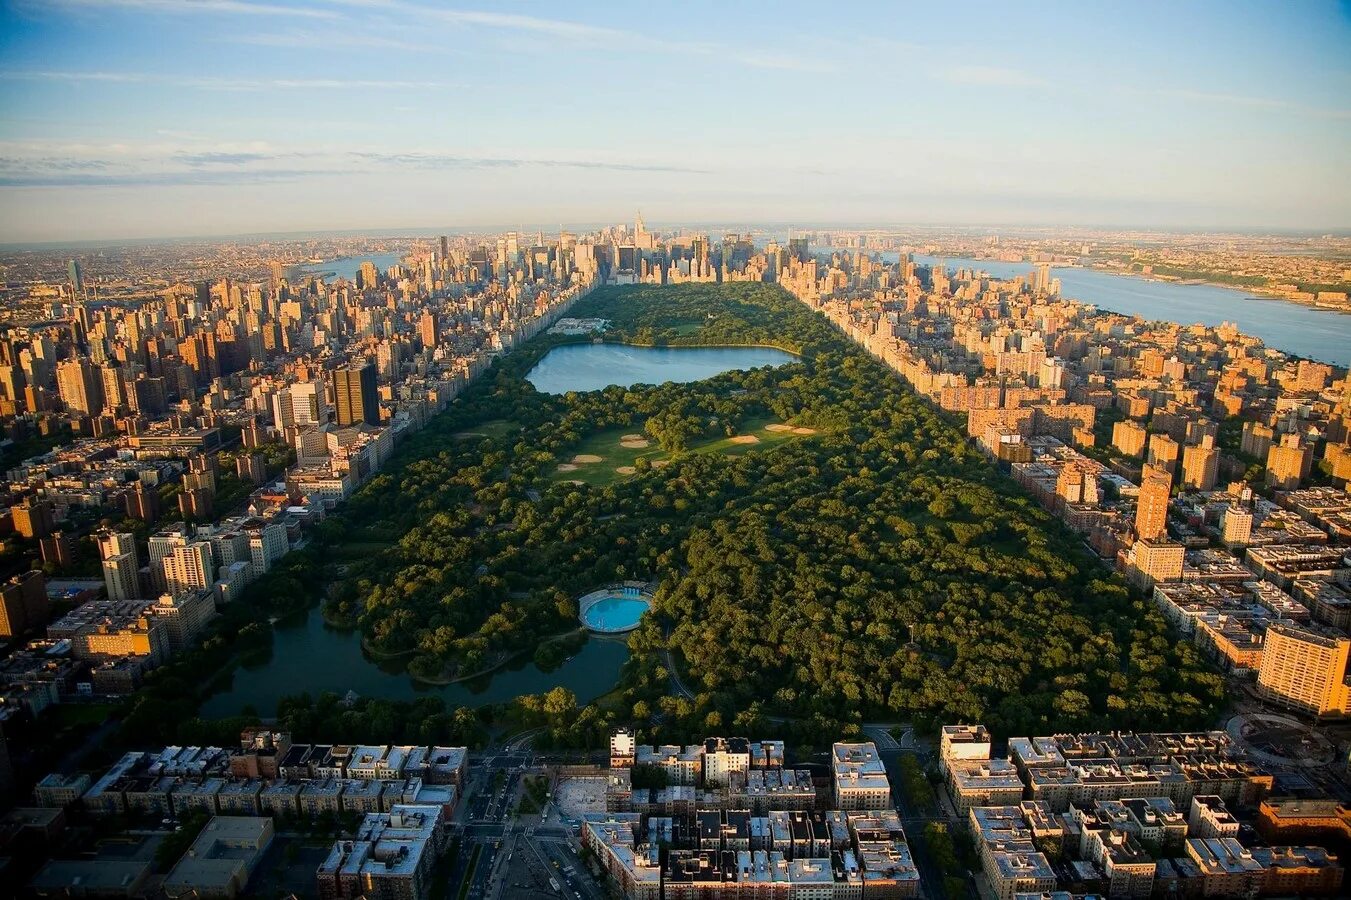 Central area. Централ парк Нью-Йорк. Централ парк Нью-Йорк площадь. Нью-Йорк Манхэттен Центральный парк. Вид на централ парк Нью Йорк.